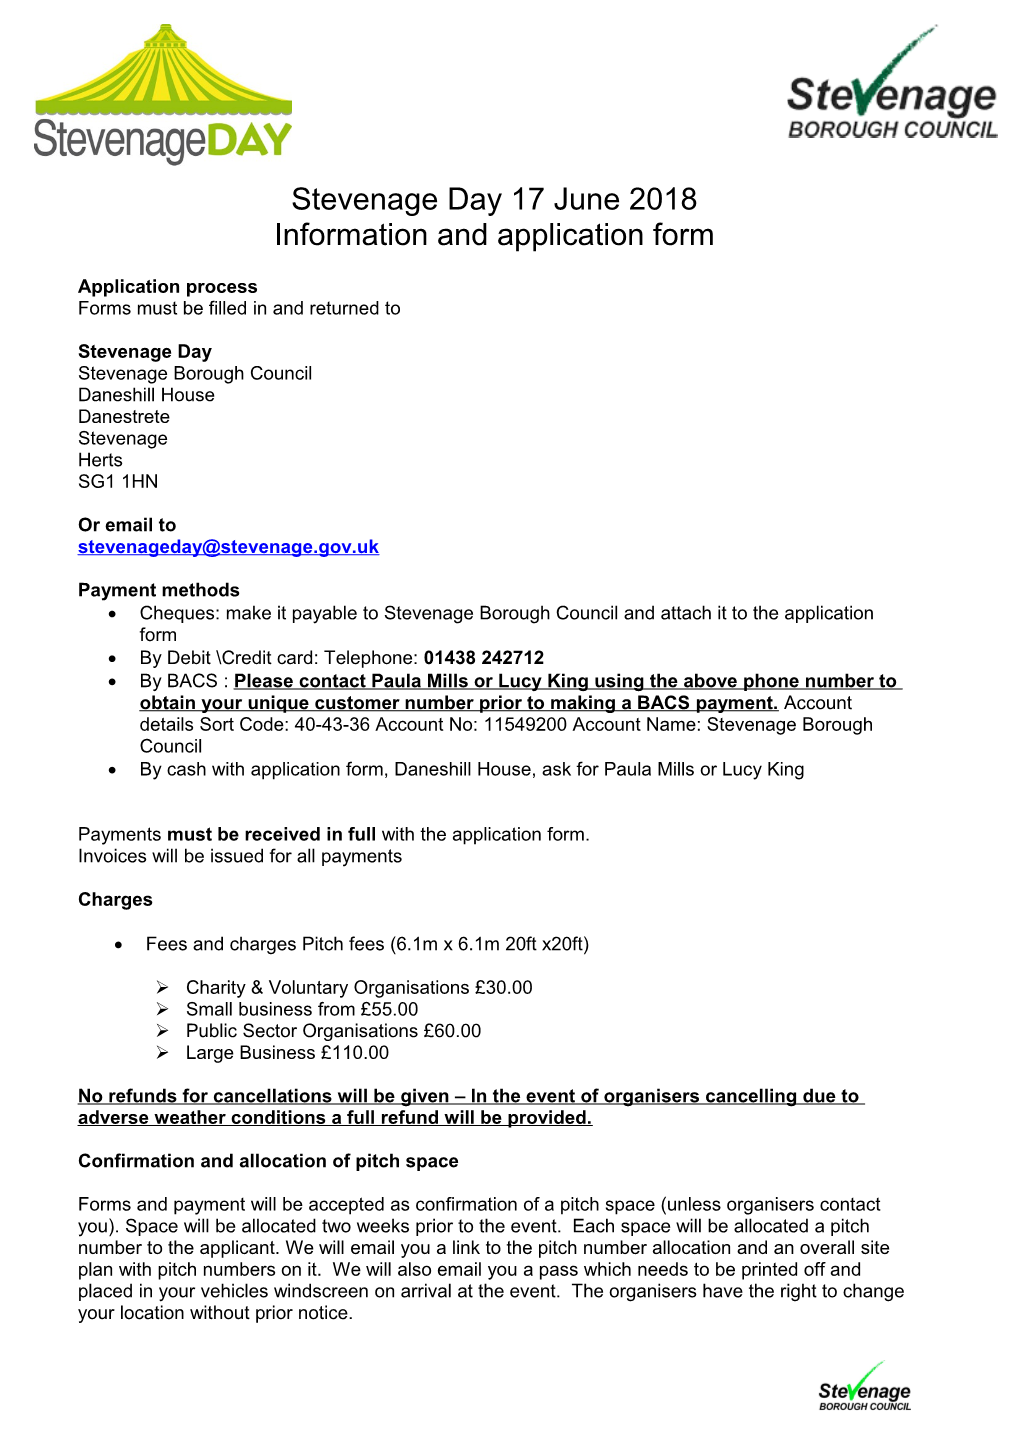 Stevenage Day Information and Application Form